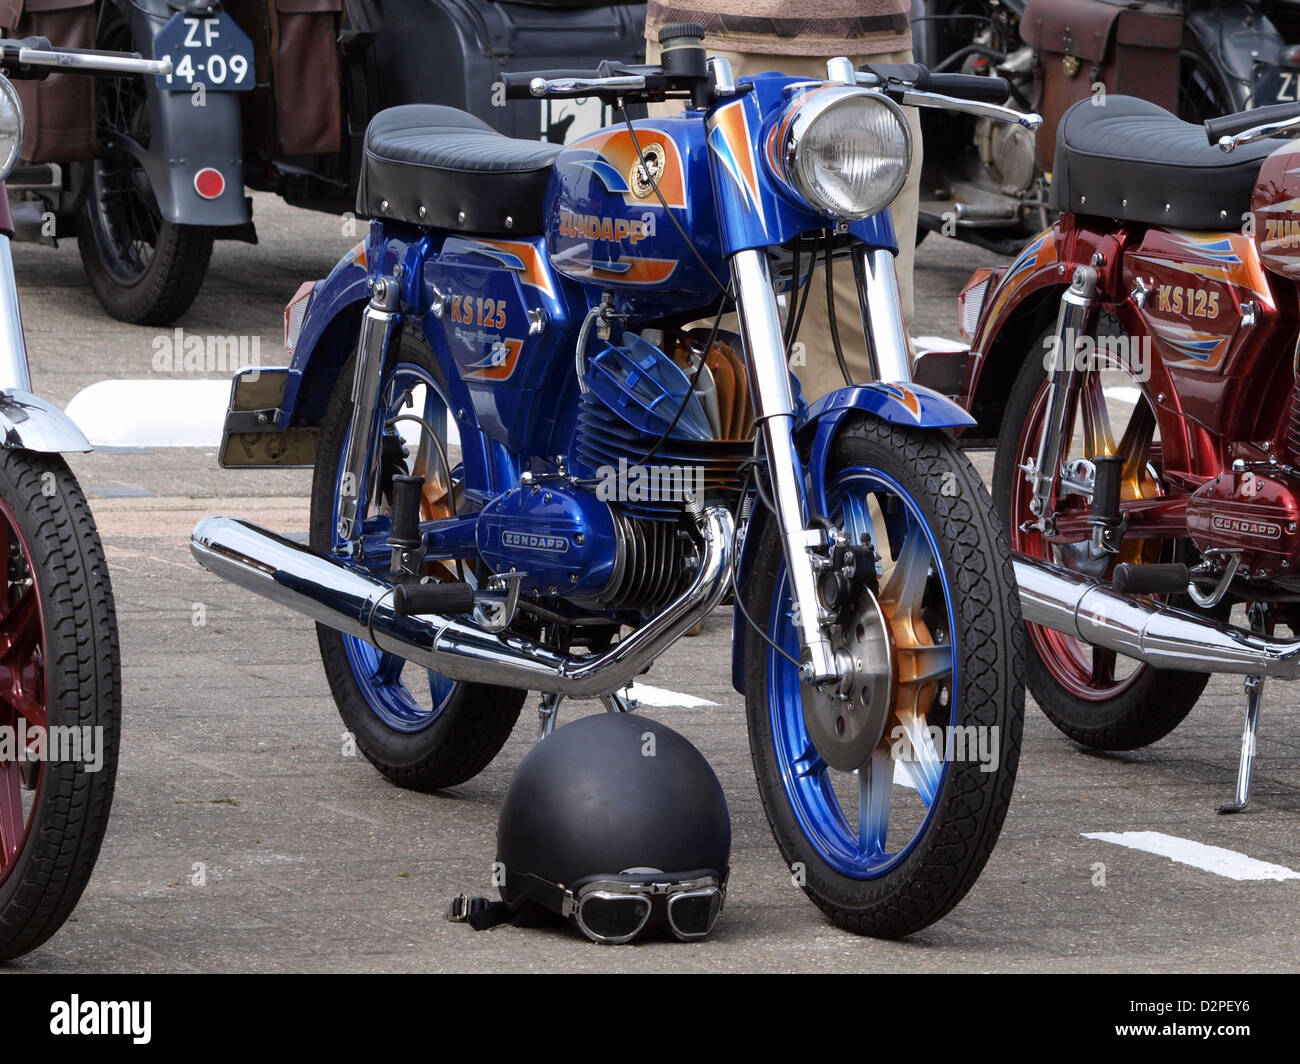 Zündapp motorcycles zundapp Stock Photo - Alamy